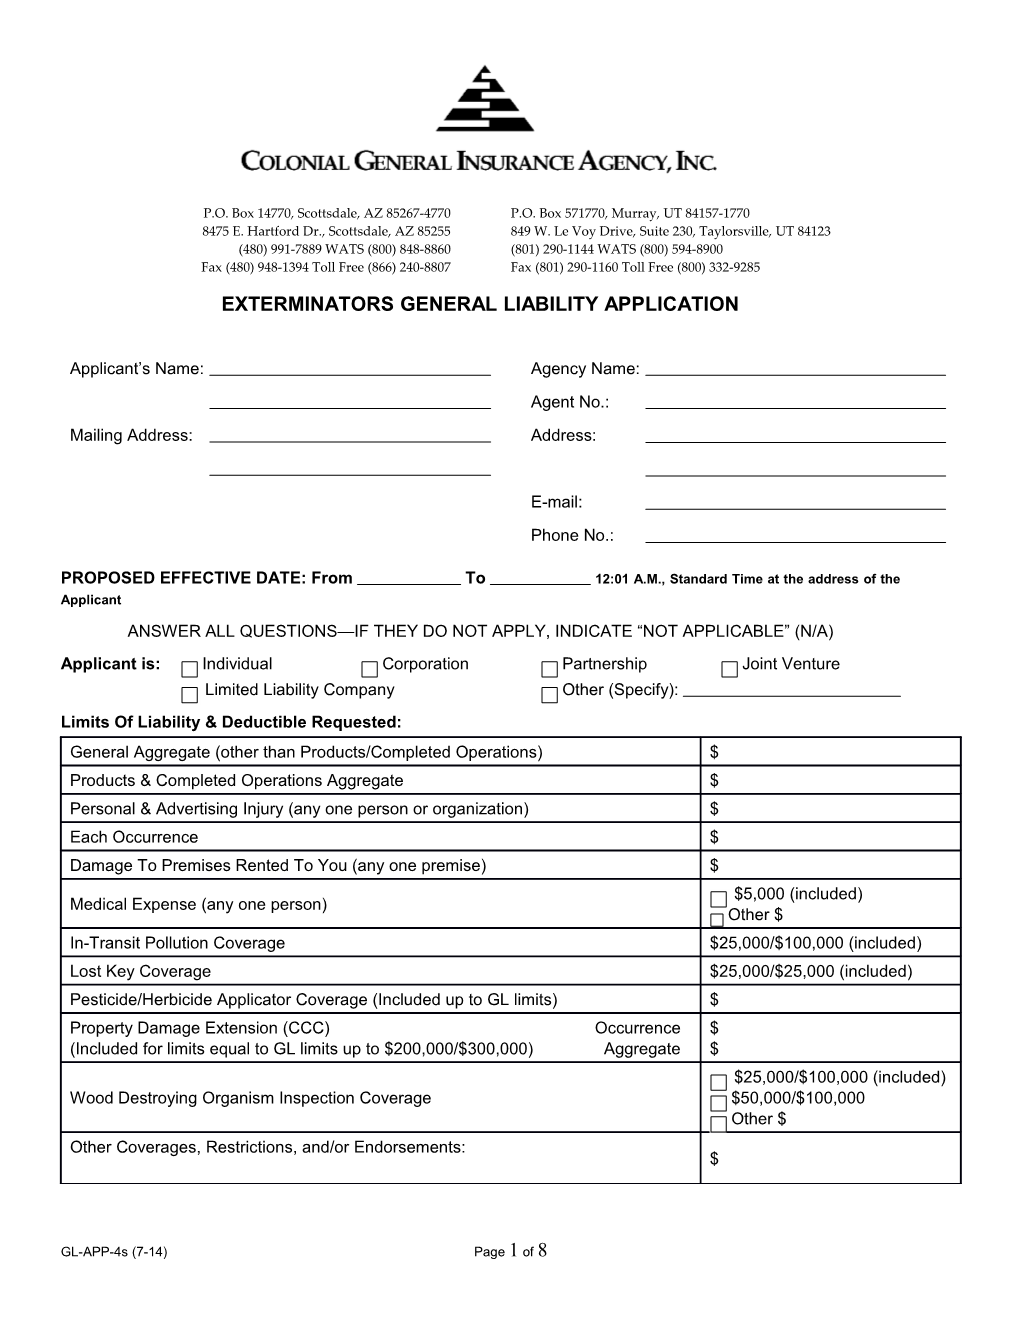 Exterminators General Liability Application